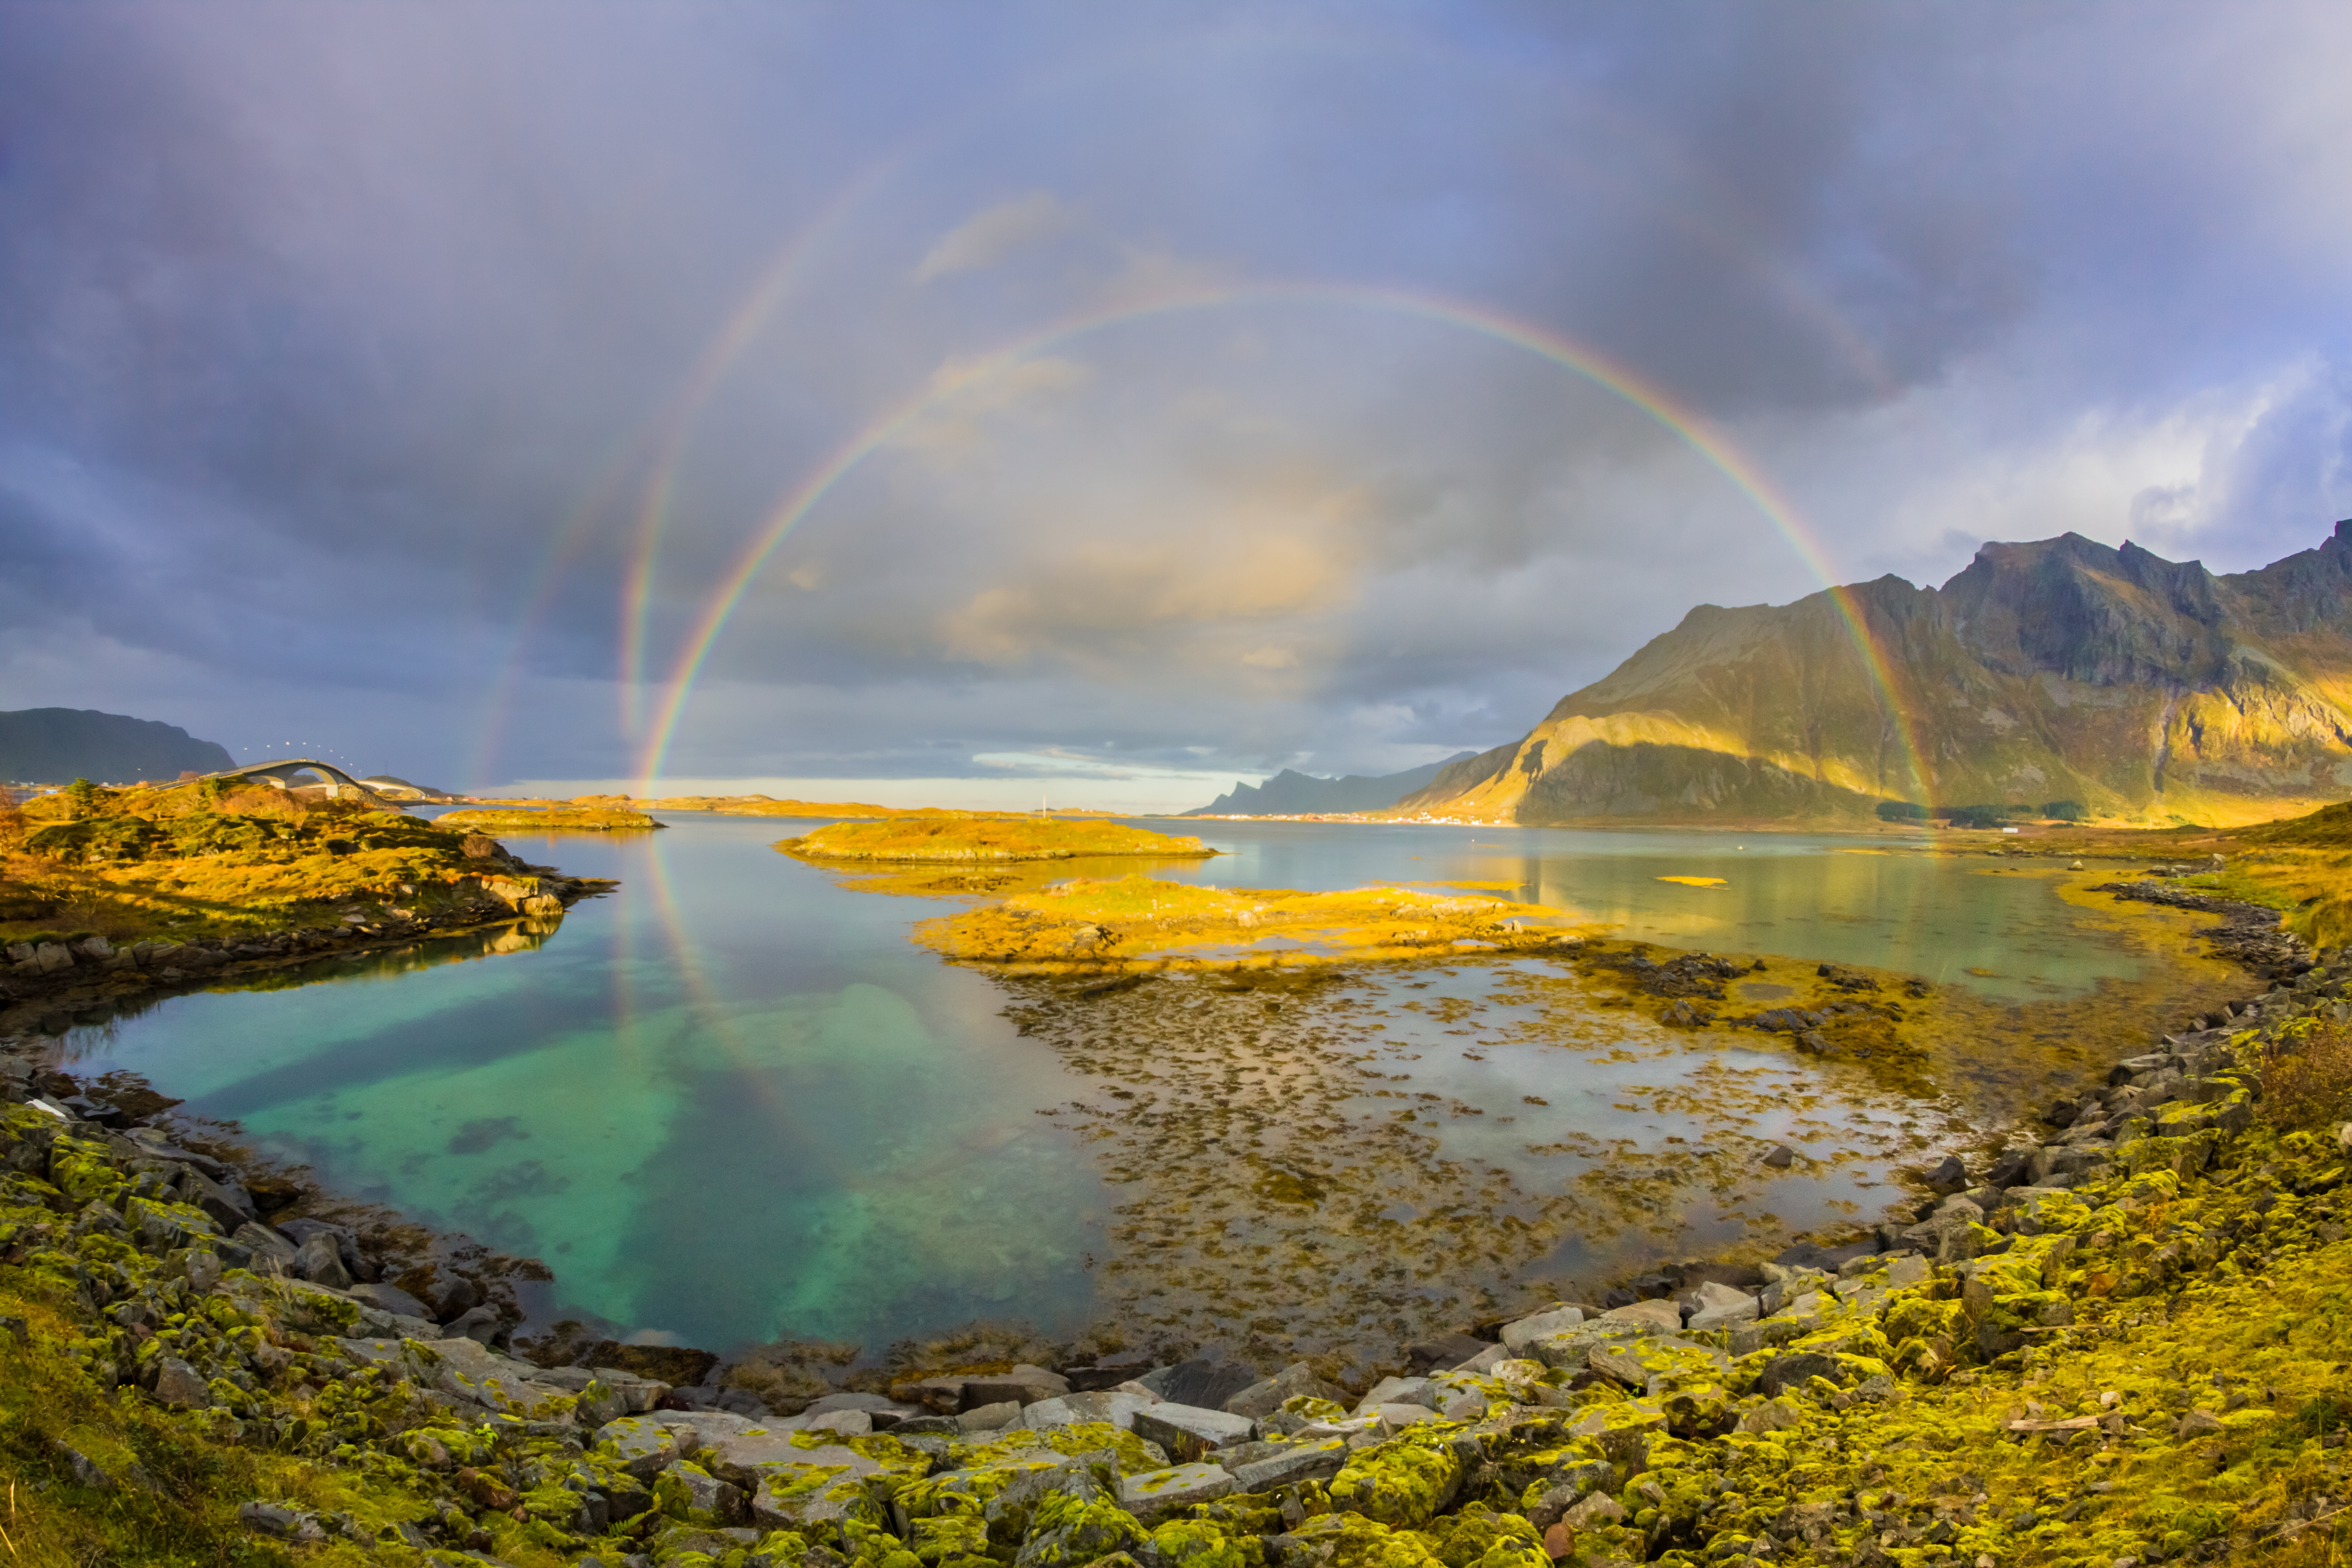 Rainbows over a lake